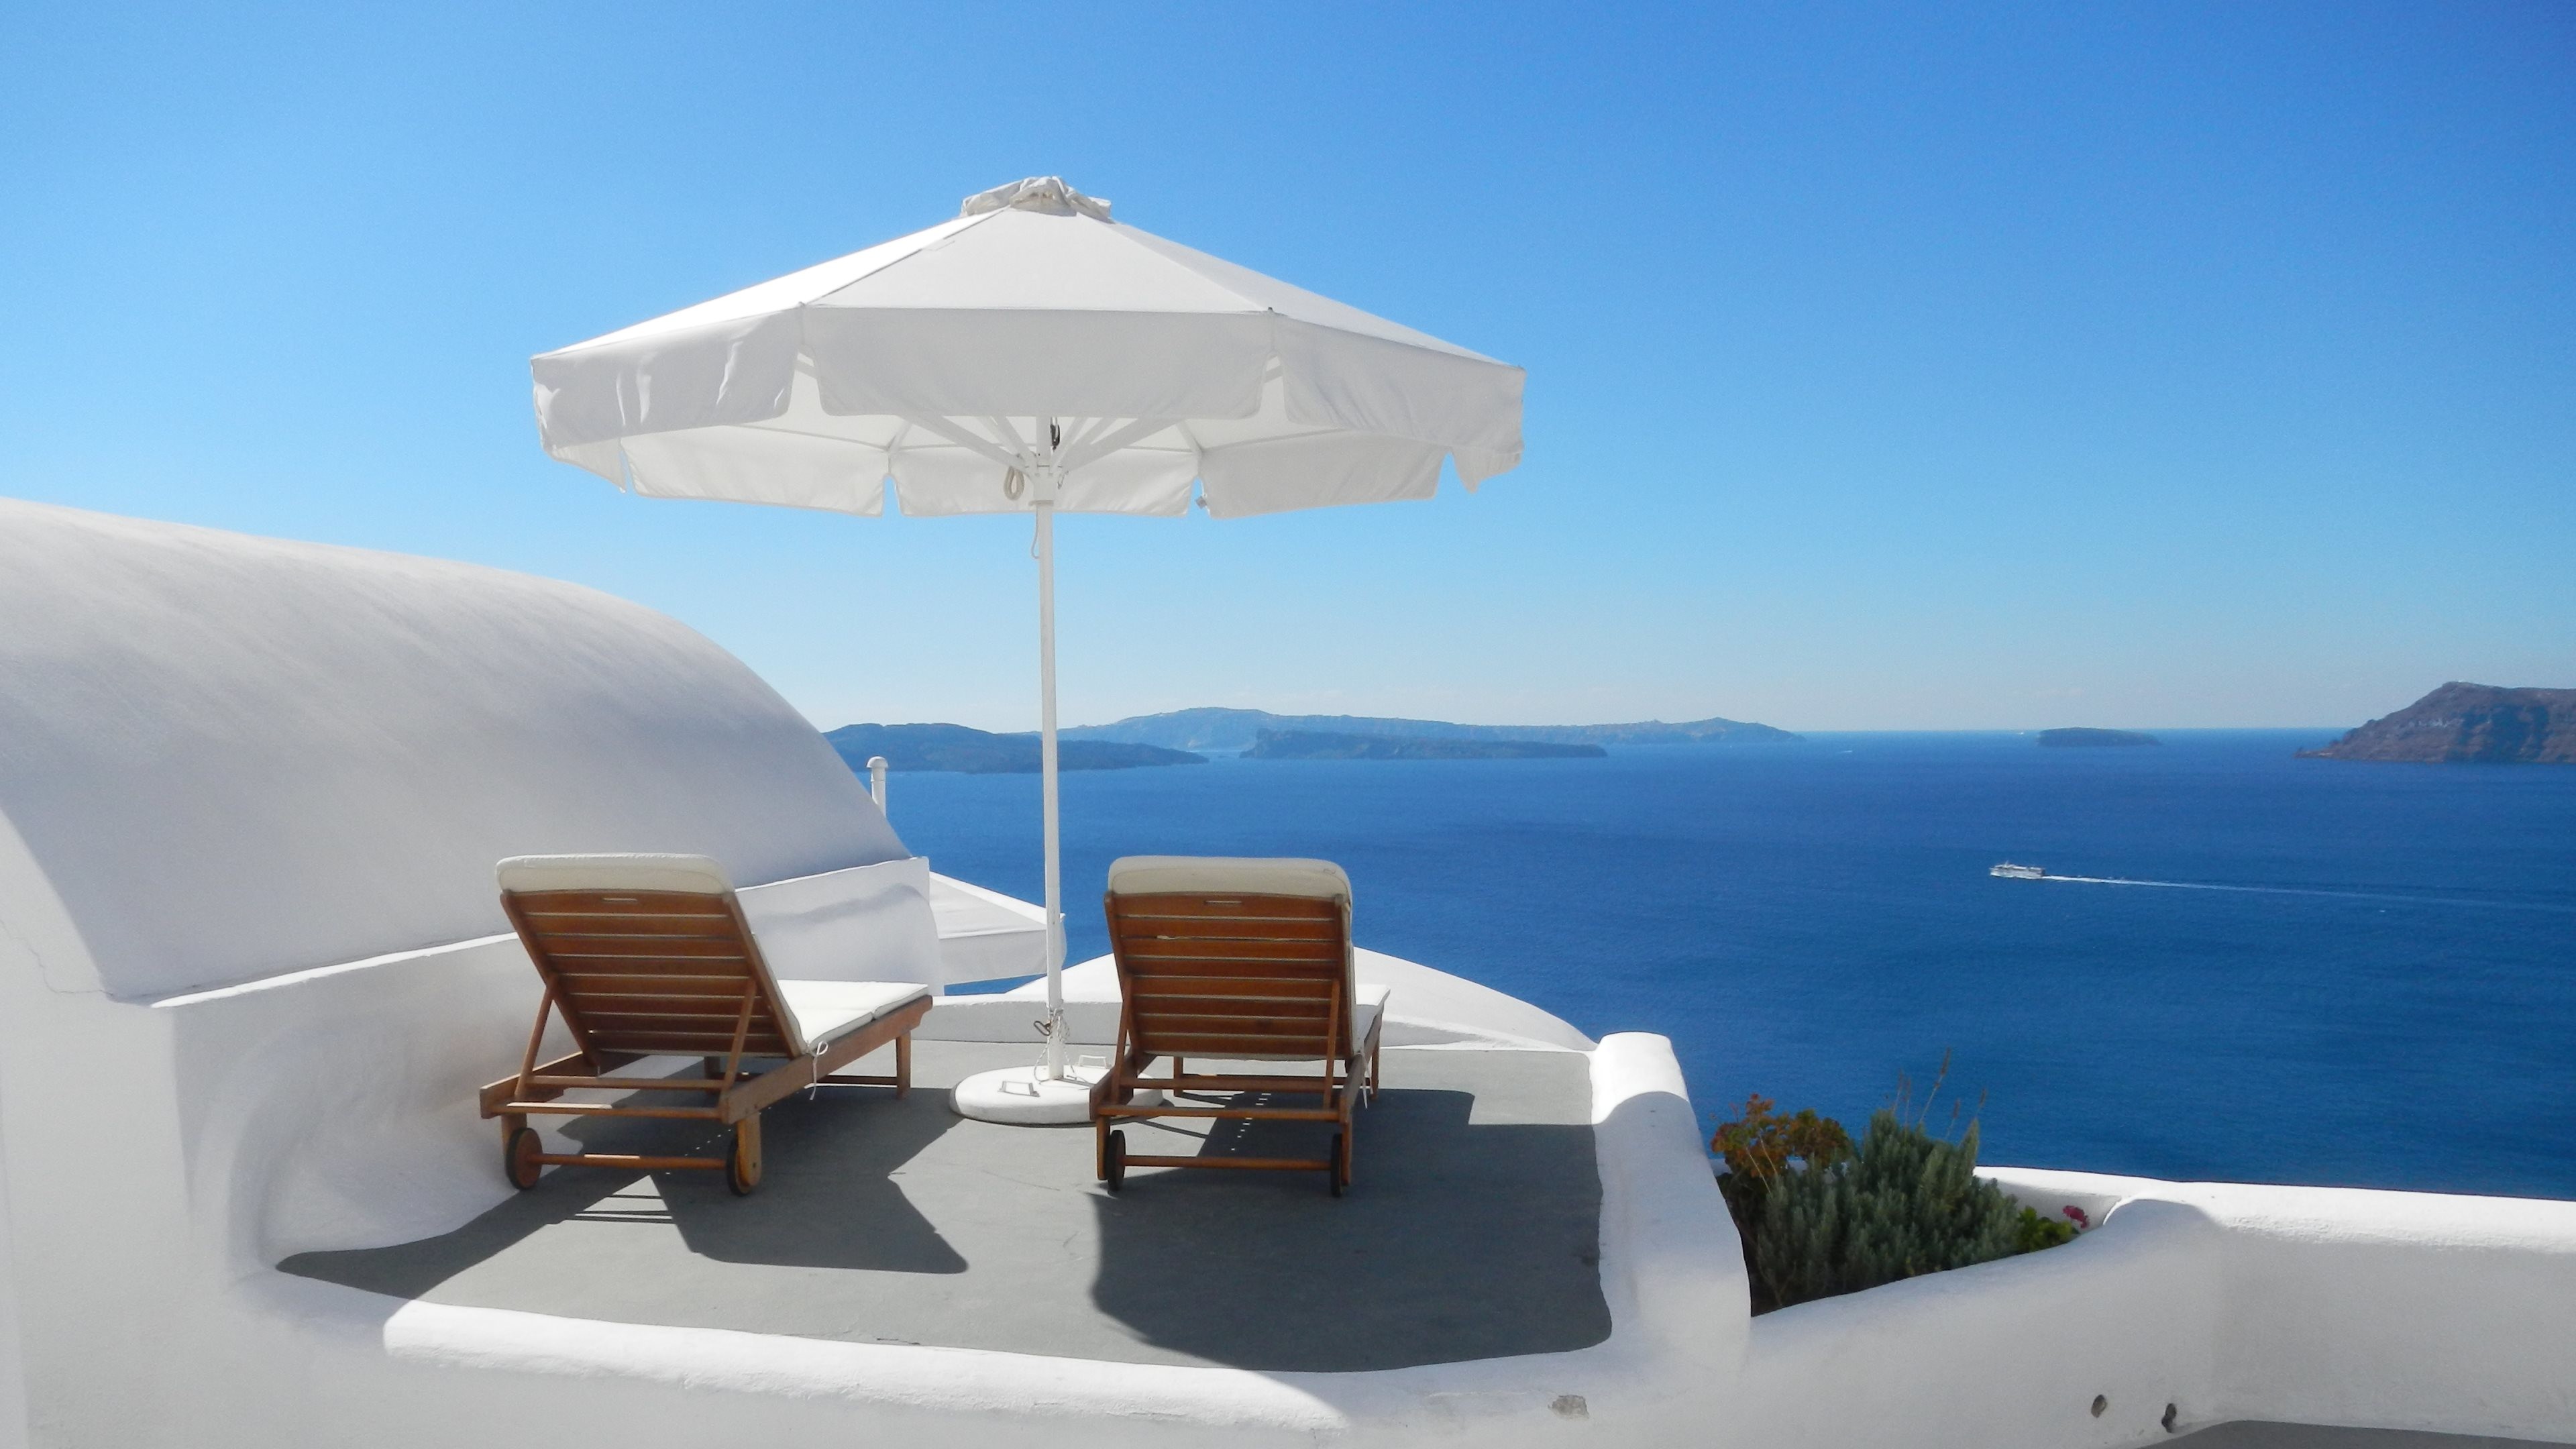 3840x2160 Wallpaper: Holiday Destination Santorini Greece. Ultra HD 4K 